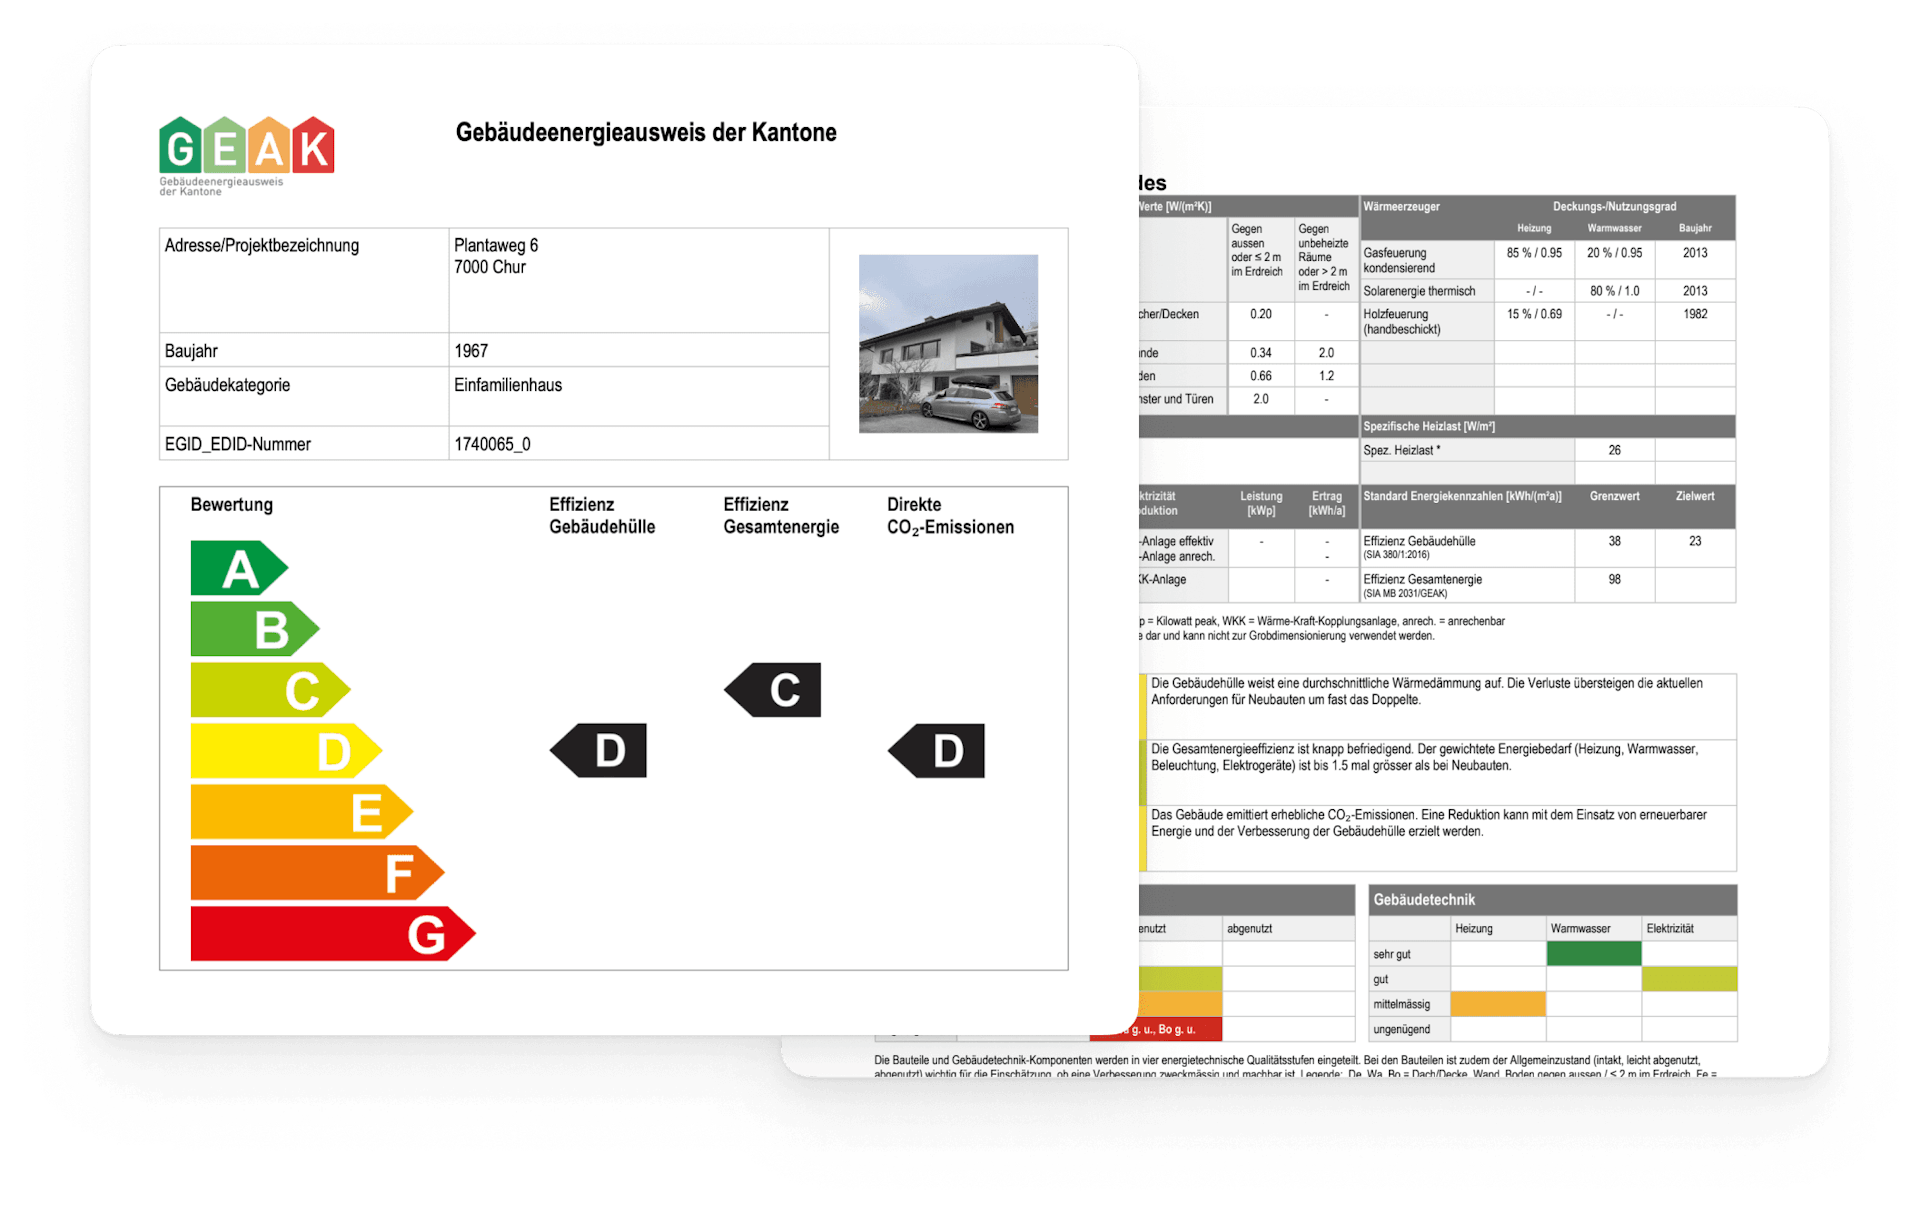 GEAK Plus - The cantonal building energy certificate with renovation plan